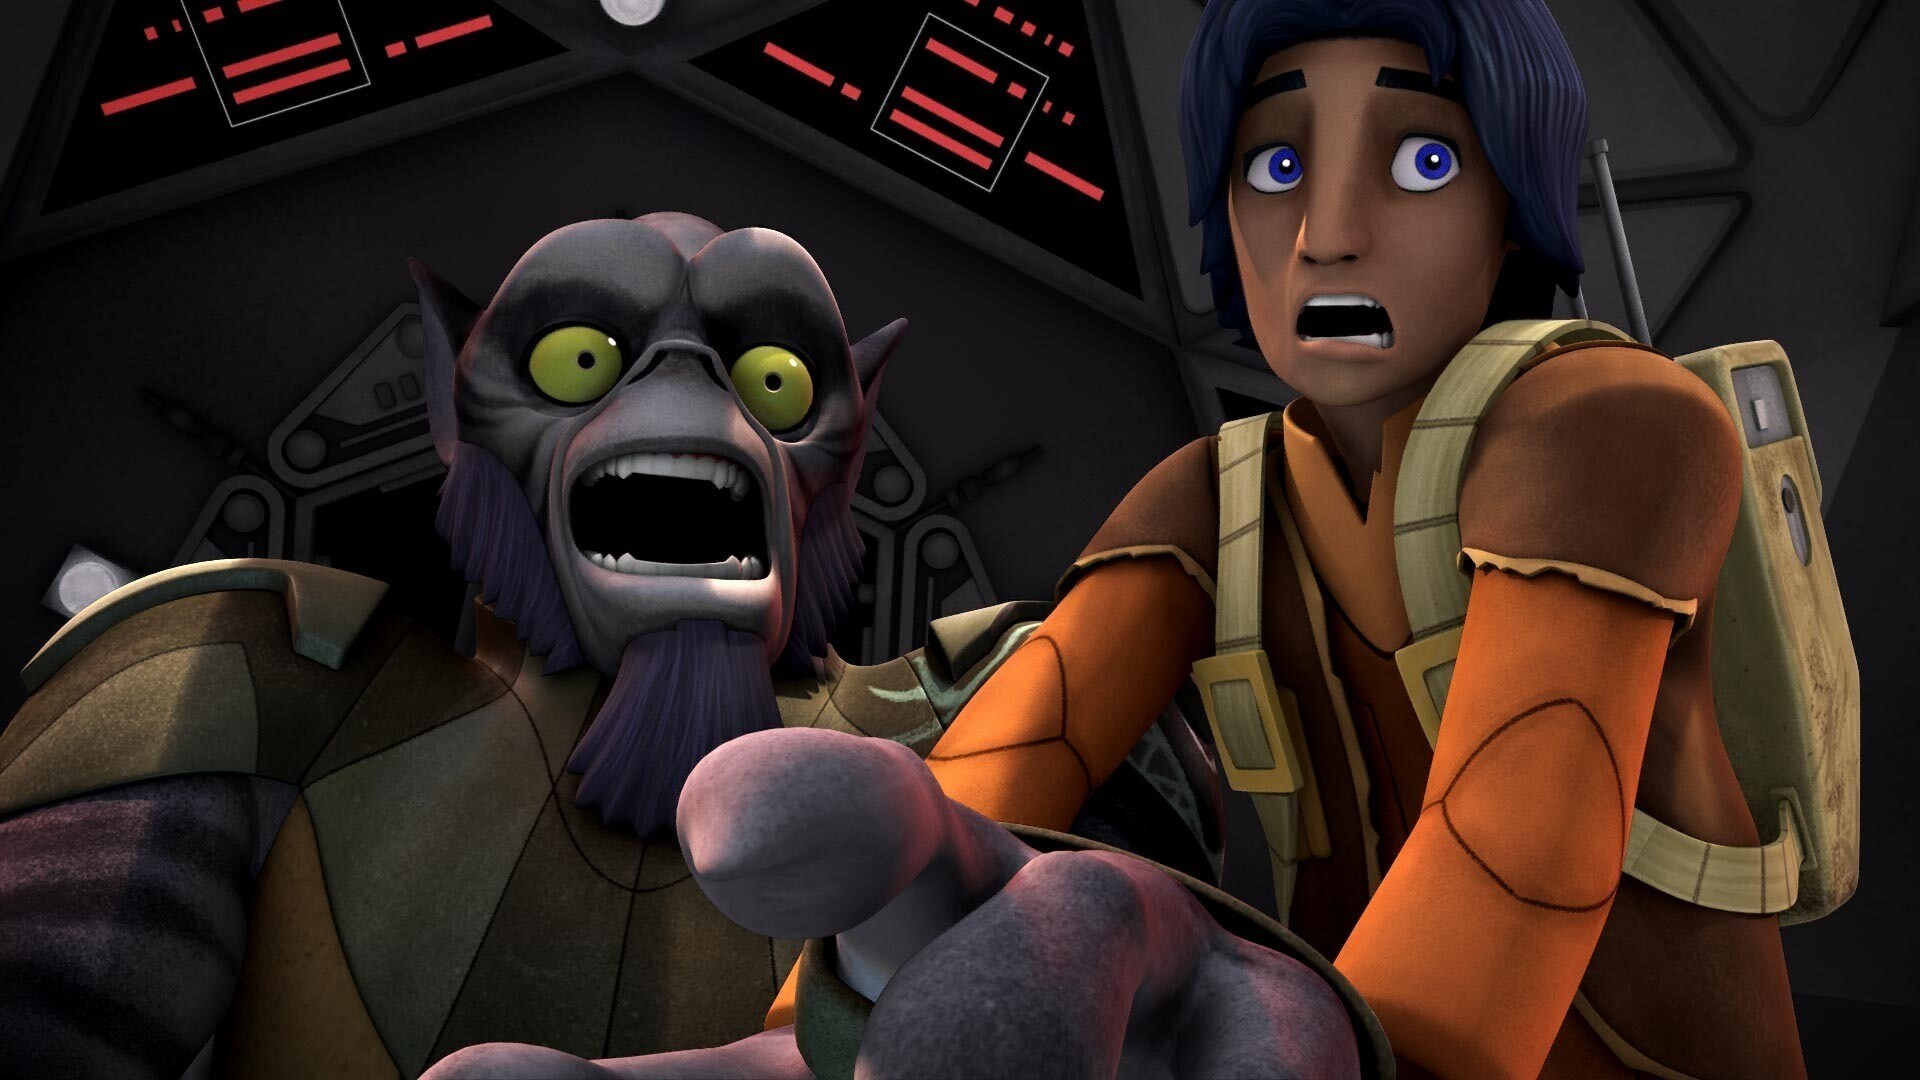 Zeb and Ezra in Star Wars Rebels